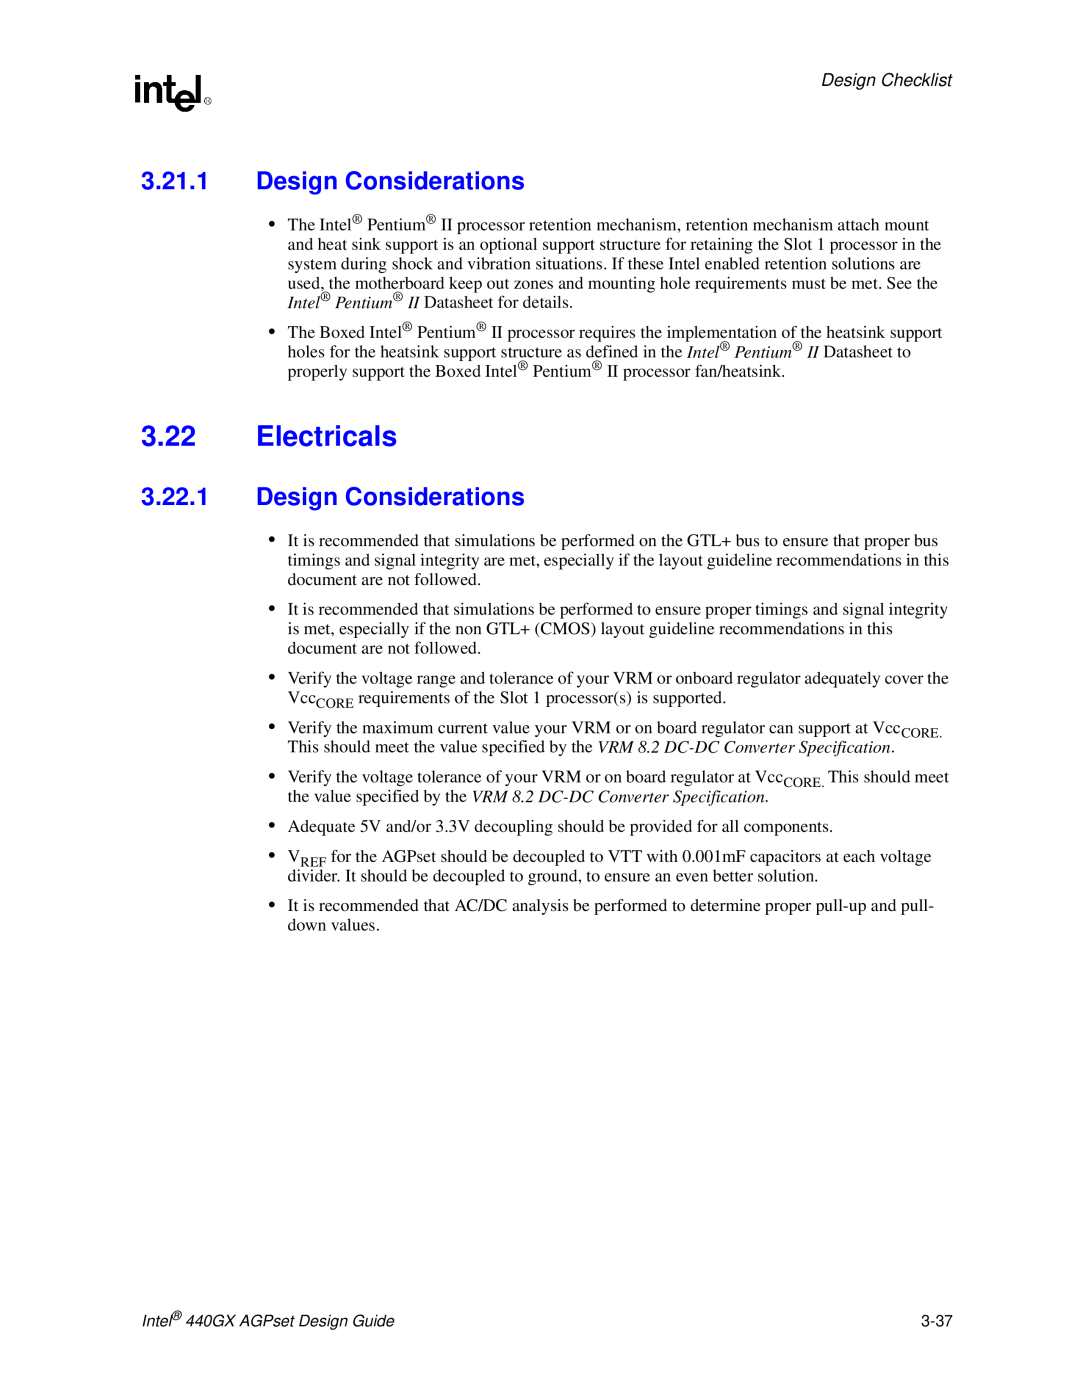 Intel 440GX manual Electricals, Design Considerations, Design Checklist 